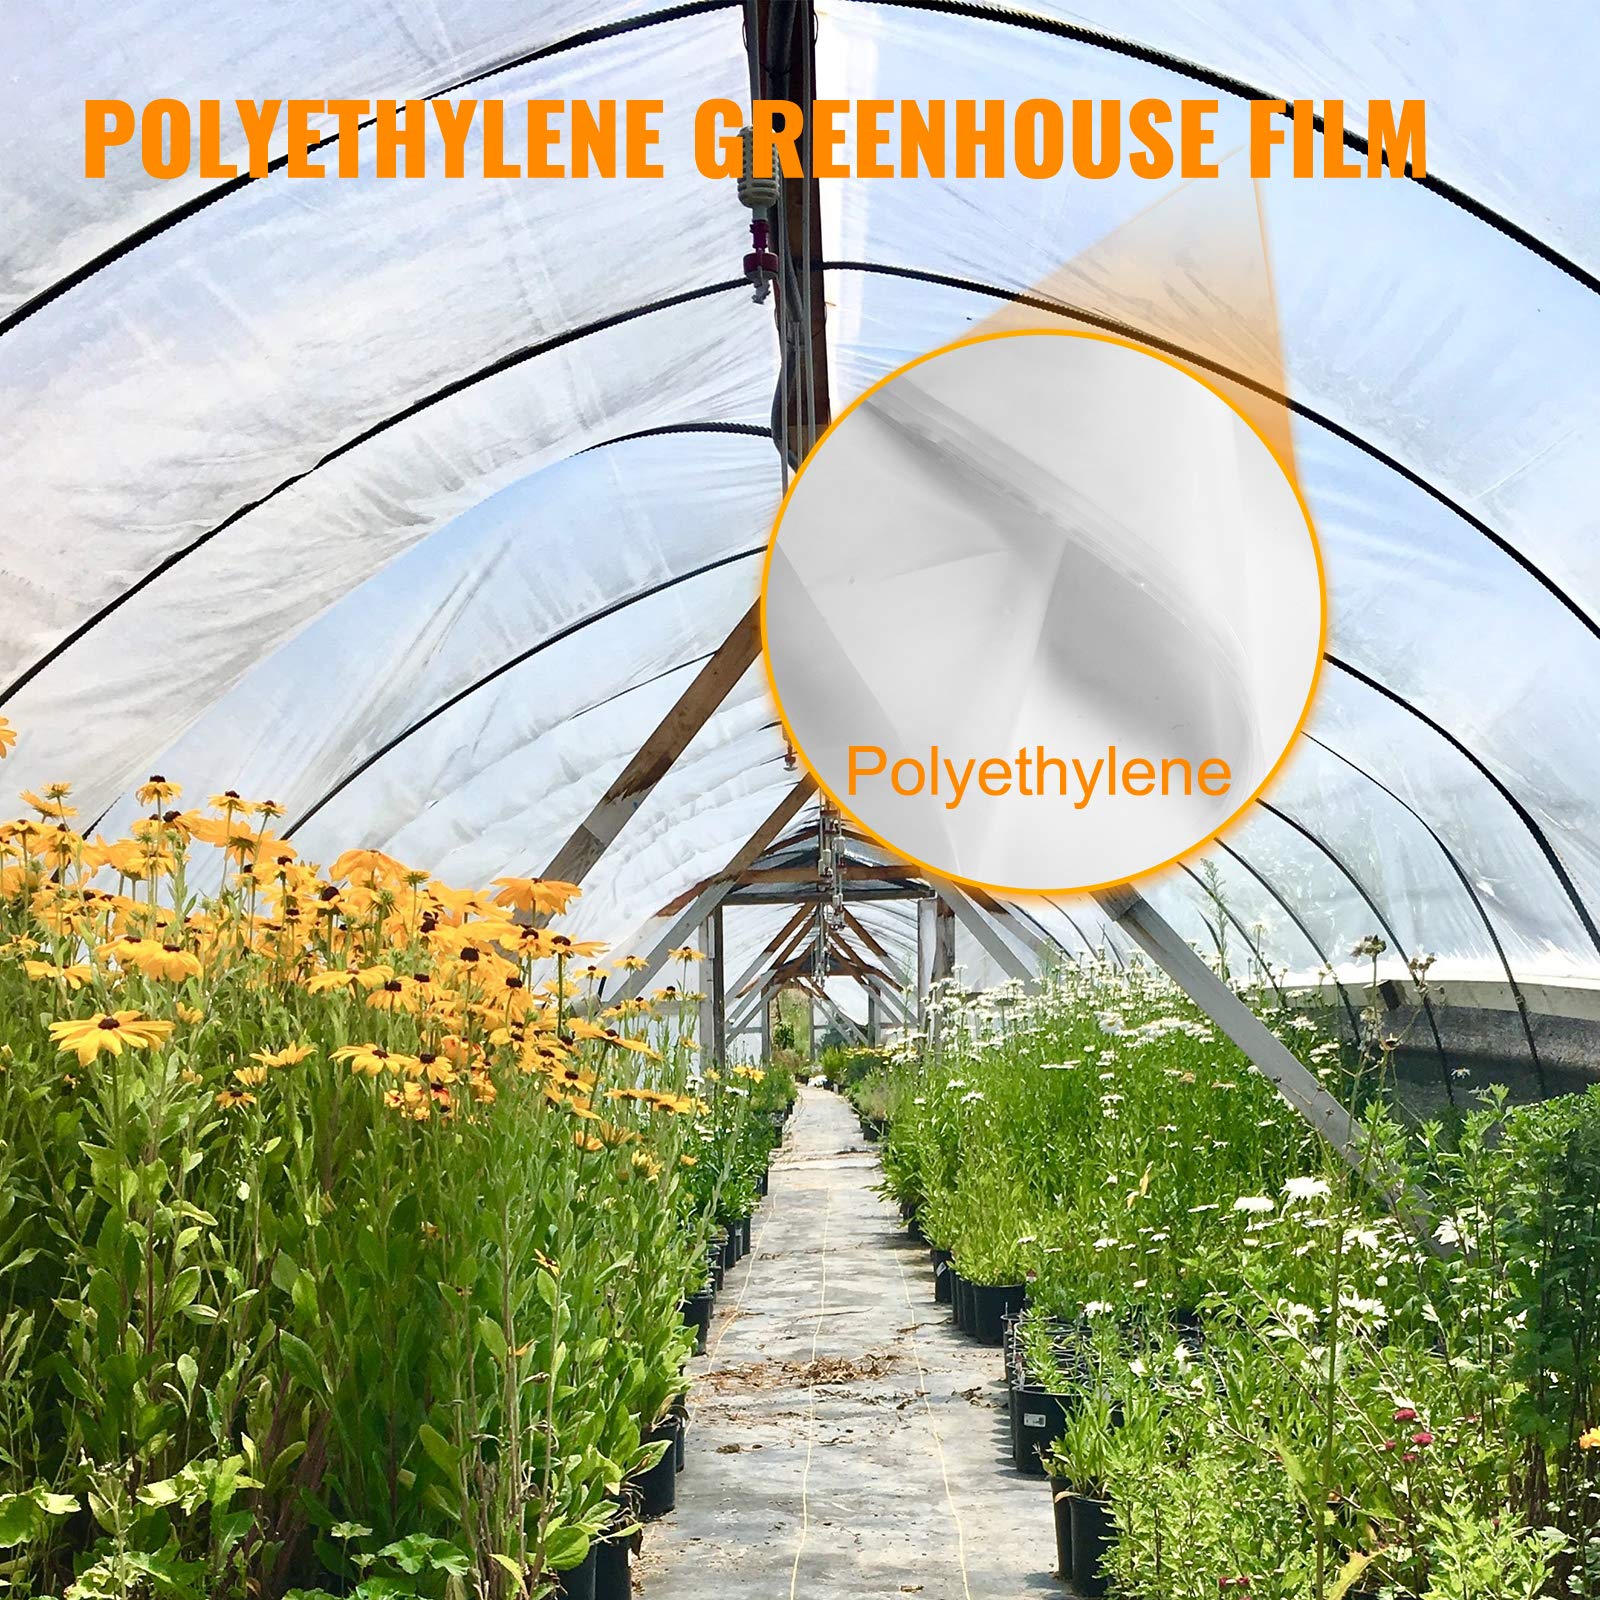 Happybuy greenhouse Film 25 x 40 ft, greenhouse Polyethylene Film 6 Mil Thickness, greenhouse Plastic greenhouse clear Plastic F